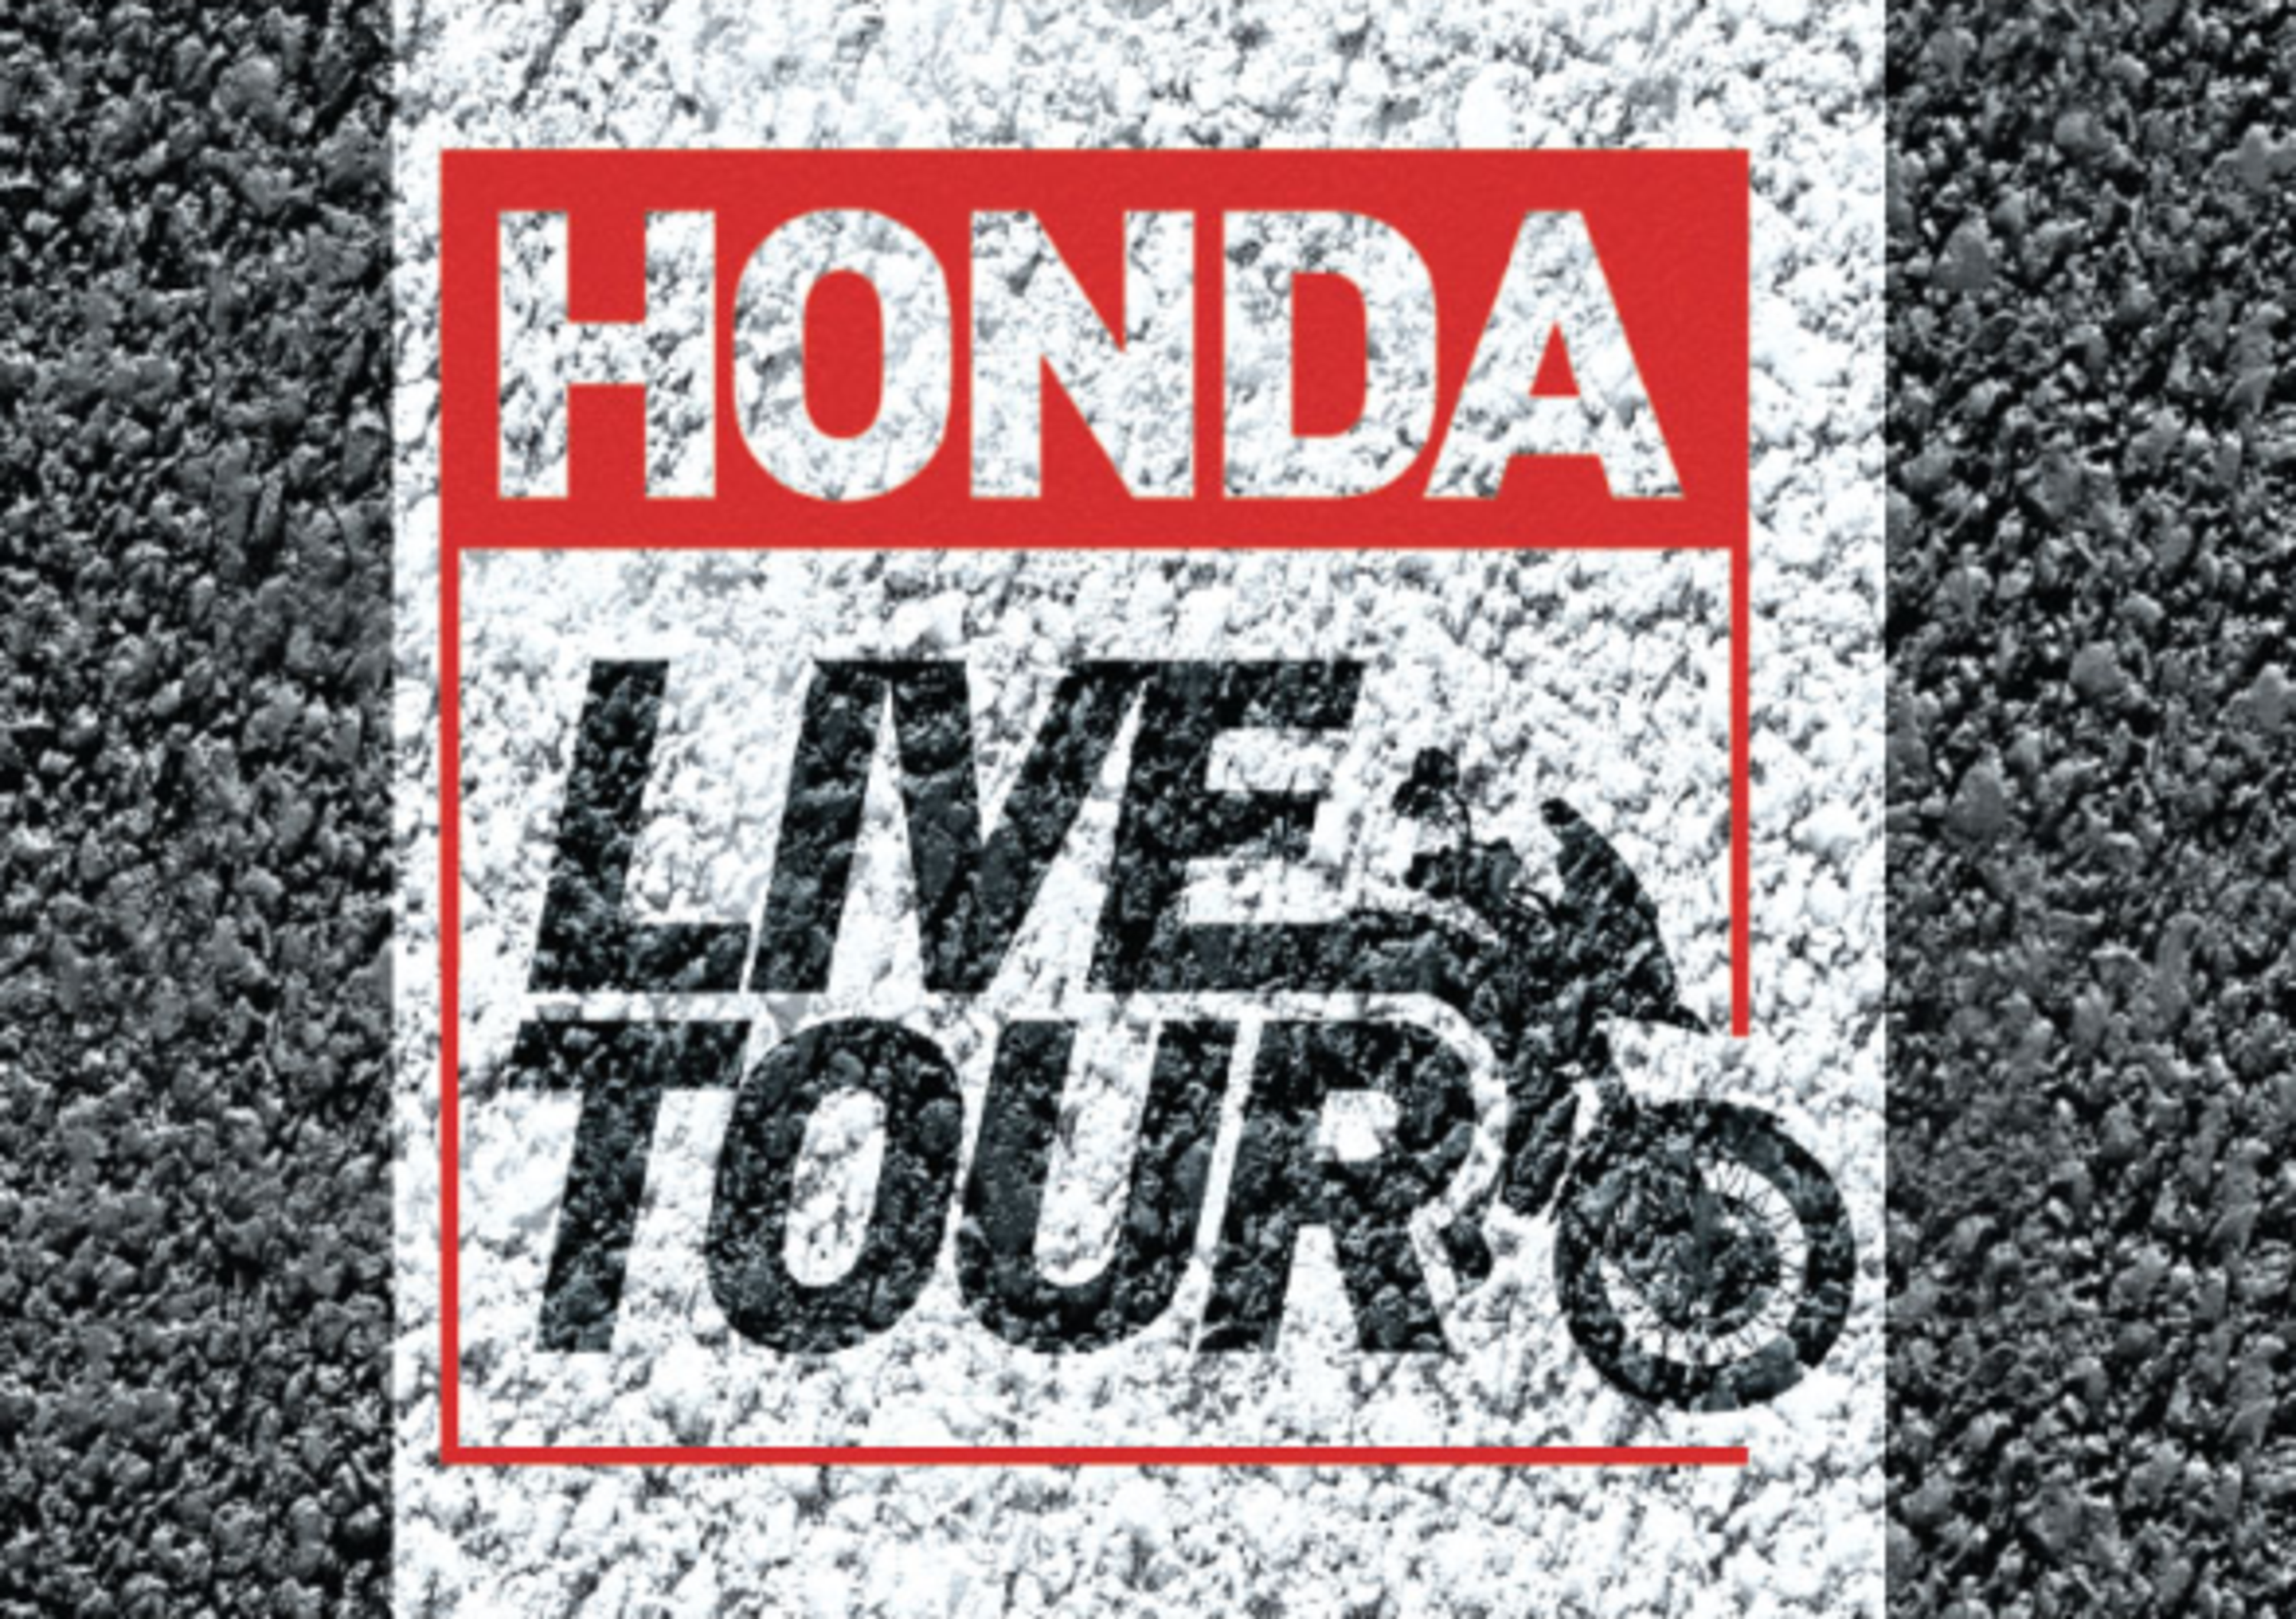 Honda Live Tour, Moto Macchion porta la gamma 2019 a Varese